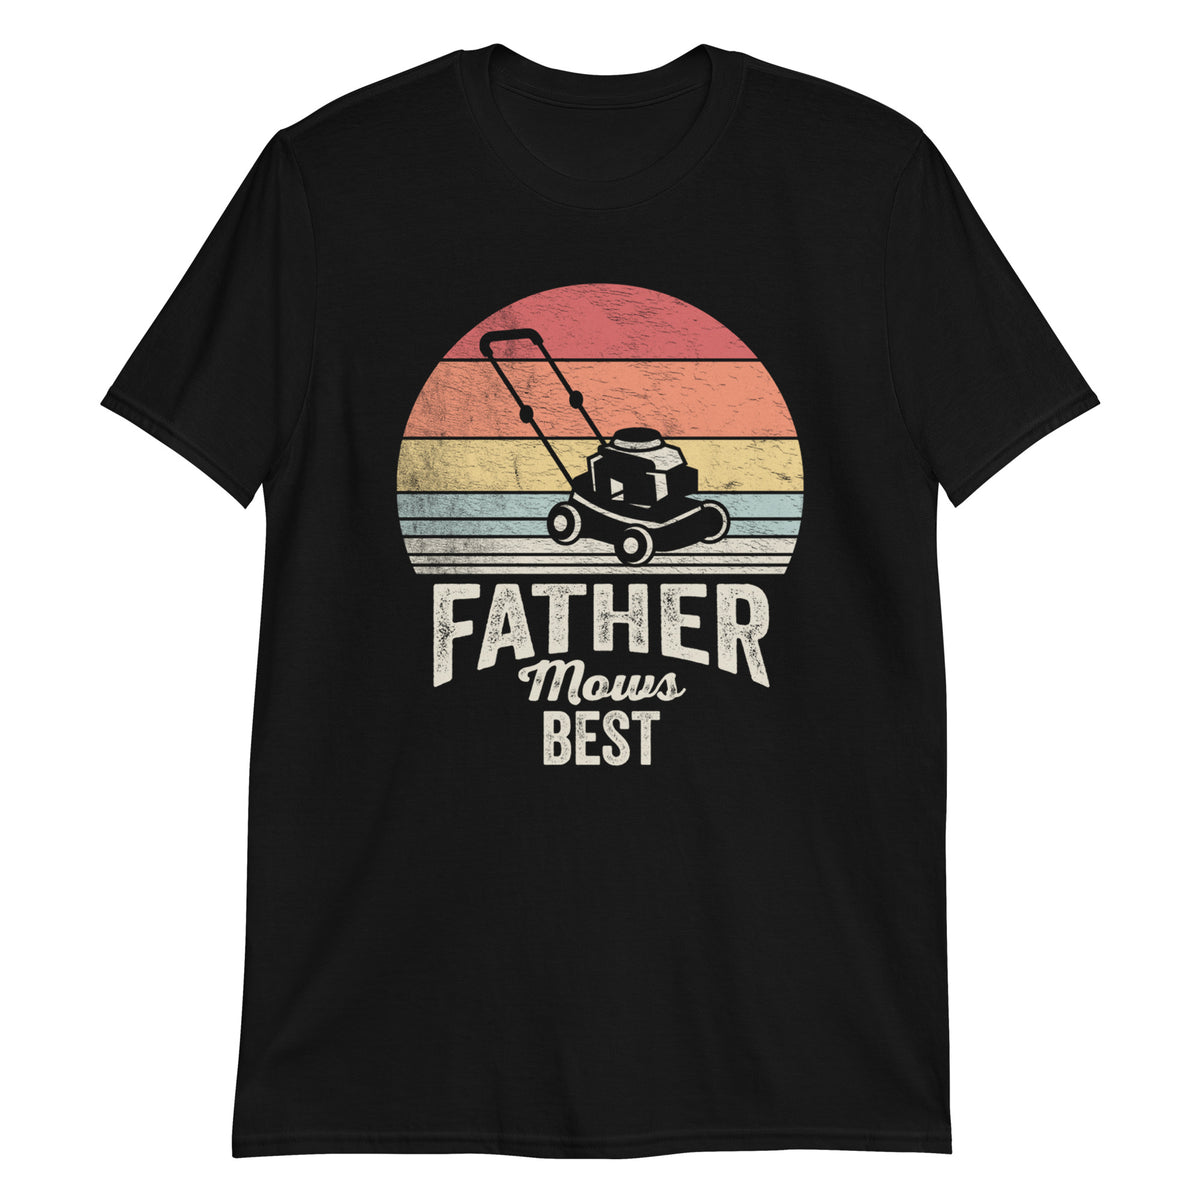 Father Mows Best T-Shirt